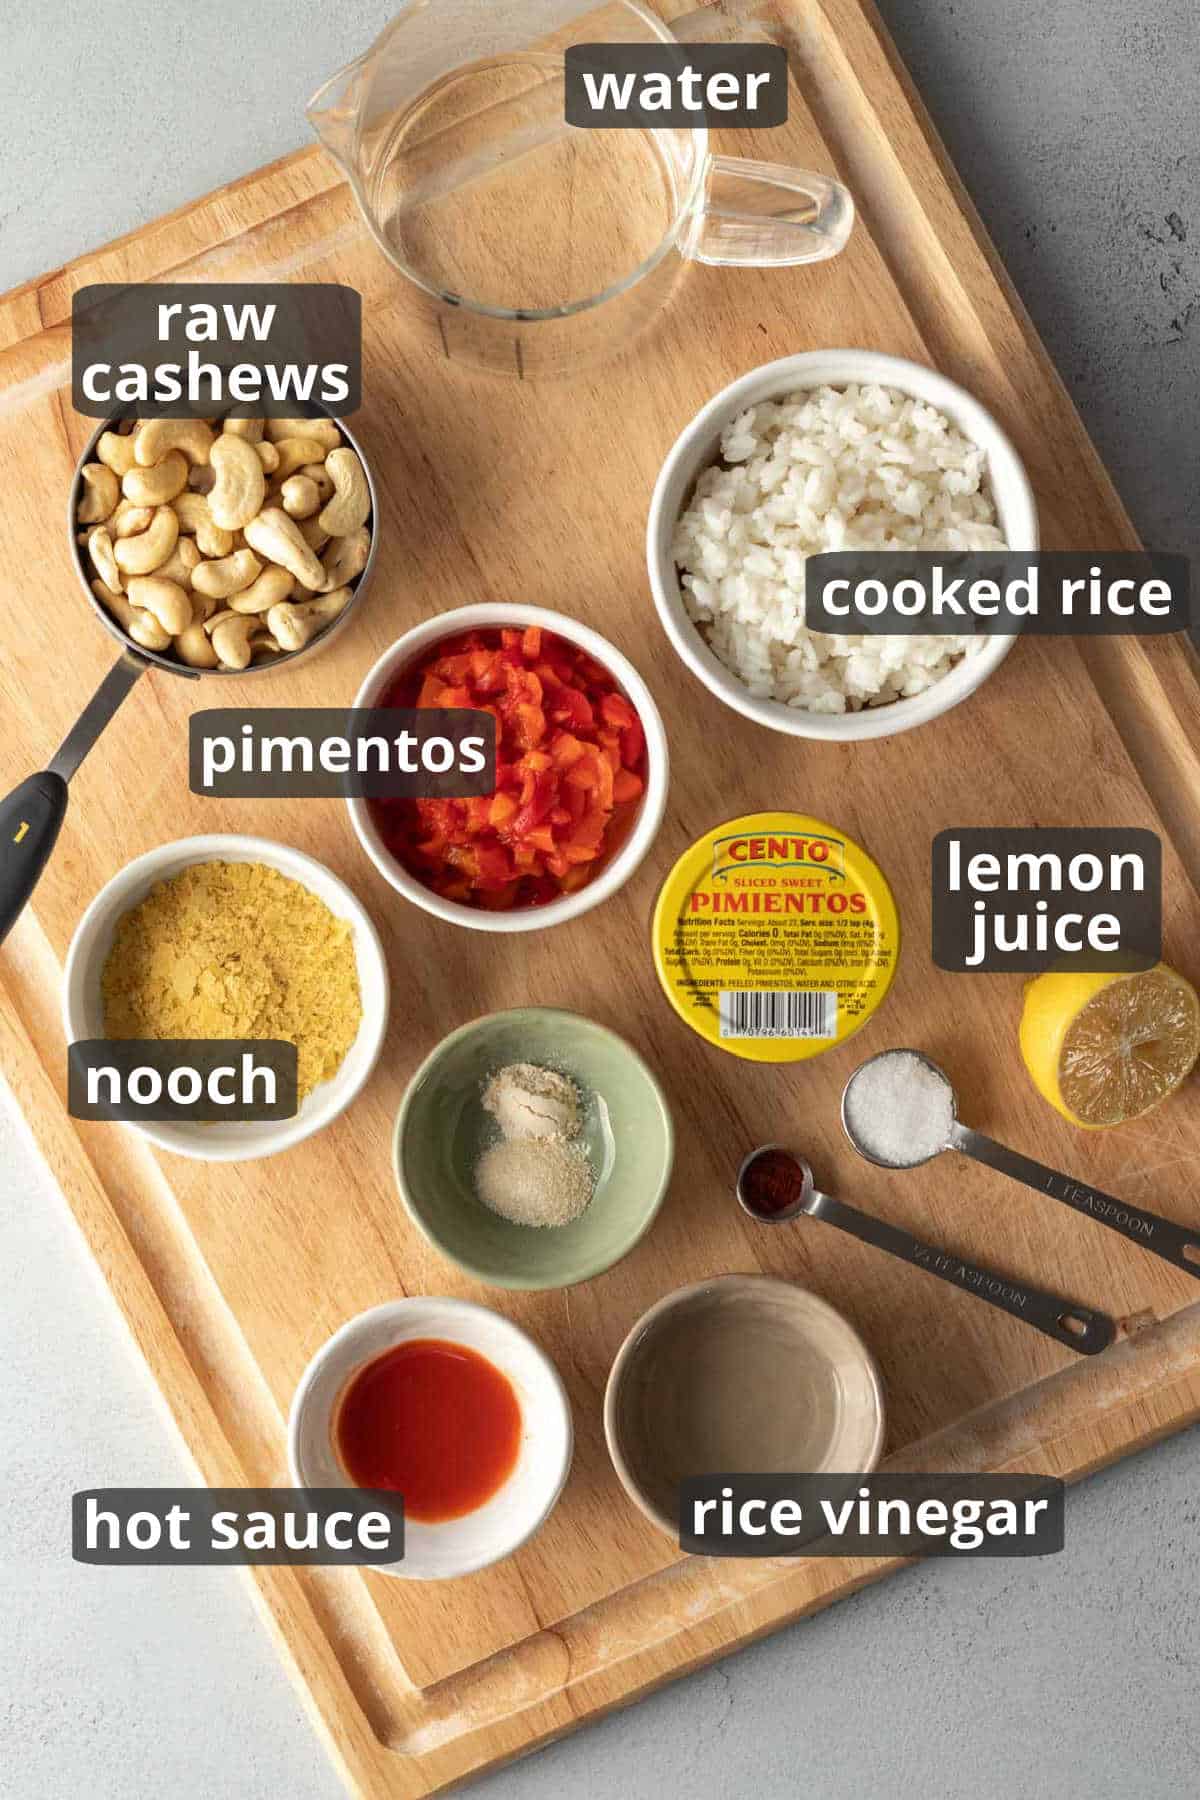 ingredients needed for vegan pimento cheese.